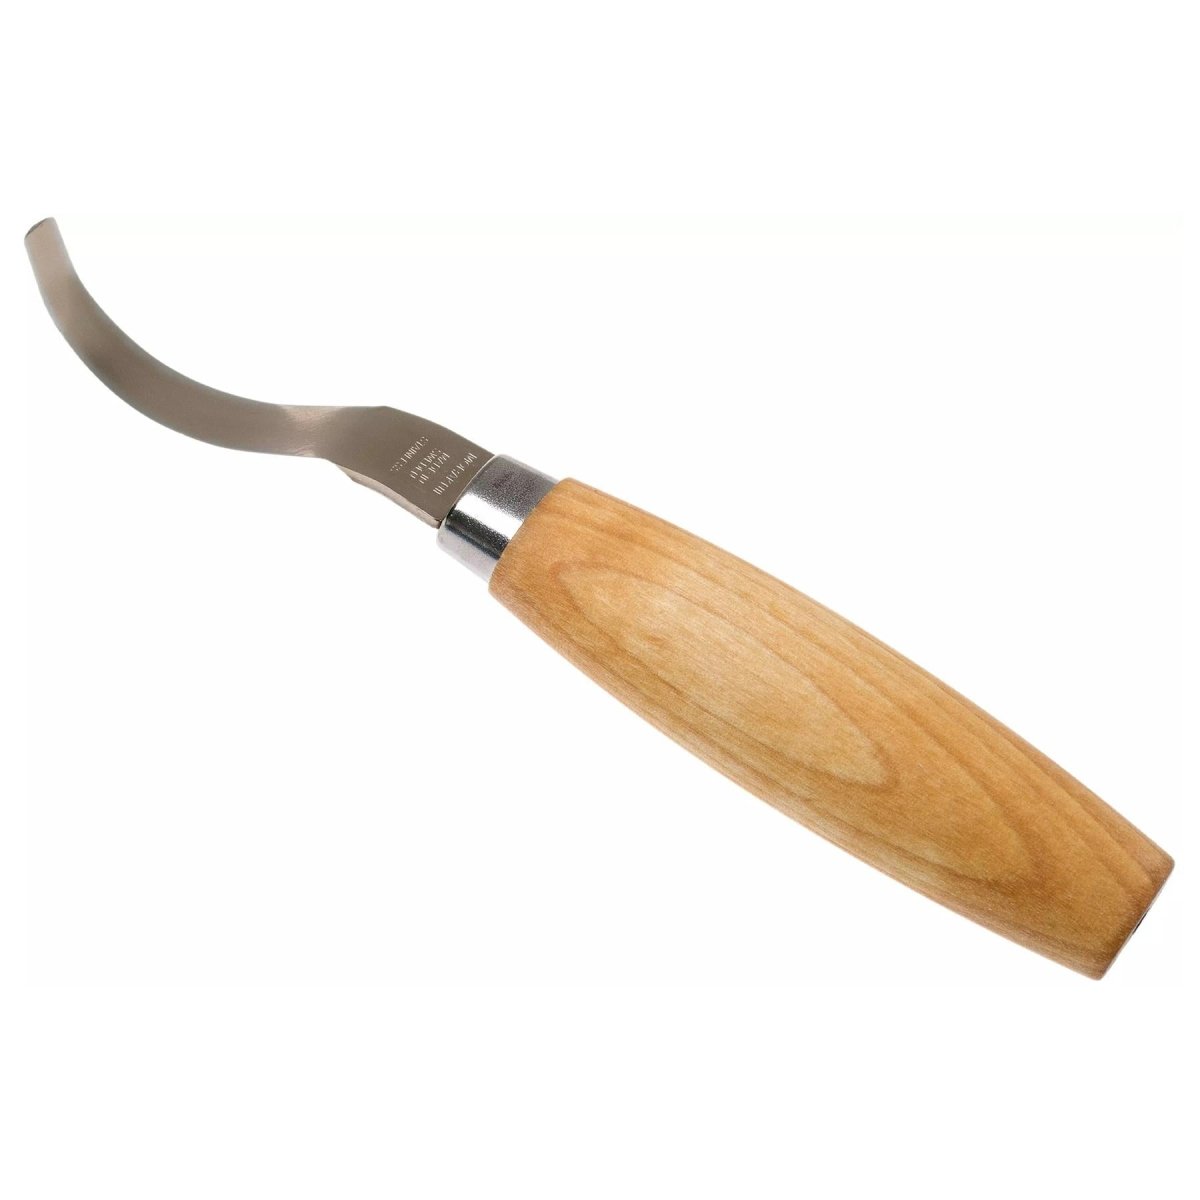 MORAKNIV hook spoon knife 163 double edge woodcarving working tool stainless